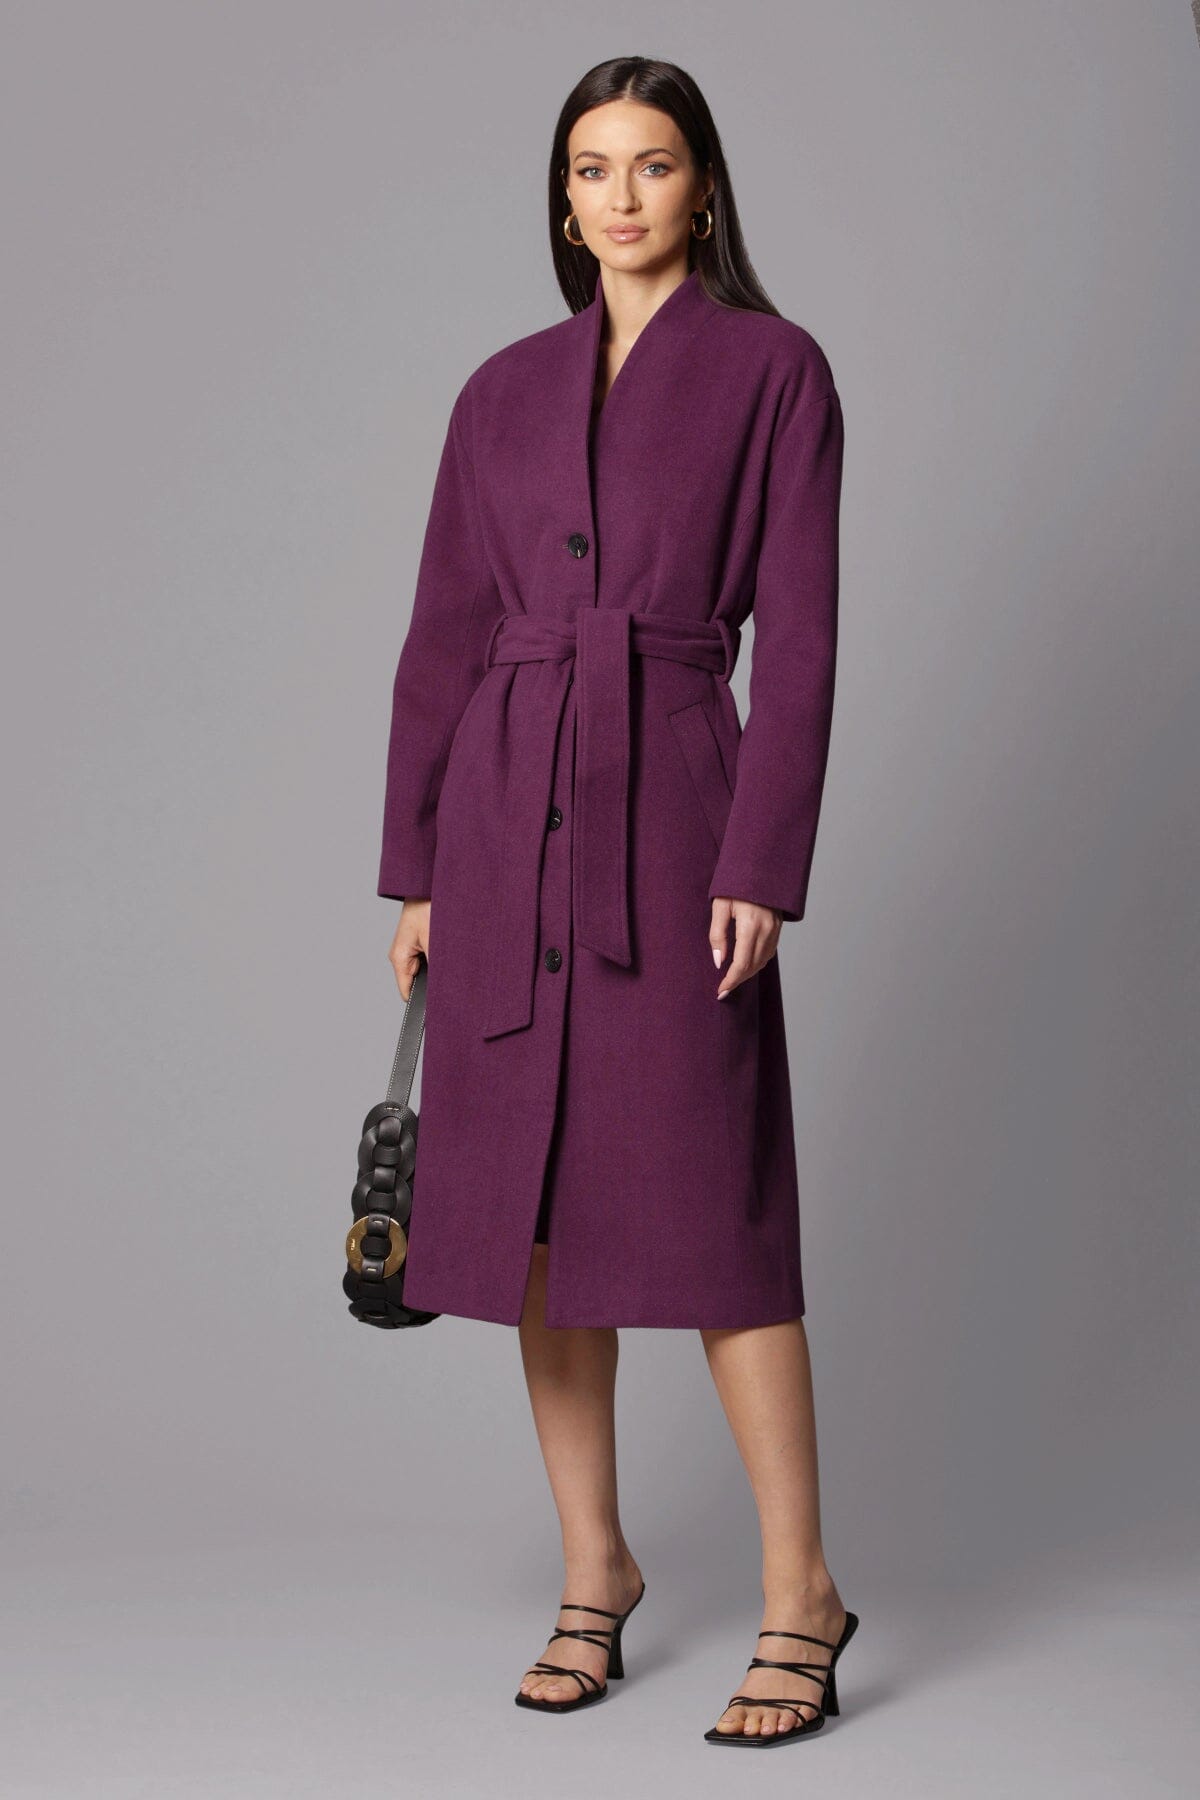 Aubergine purple wool blend overlap collar belted long tailored coat jacket - figure flattering work appropriate coats jackets for women